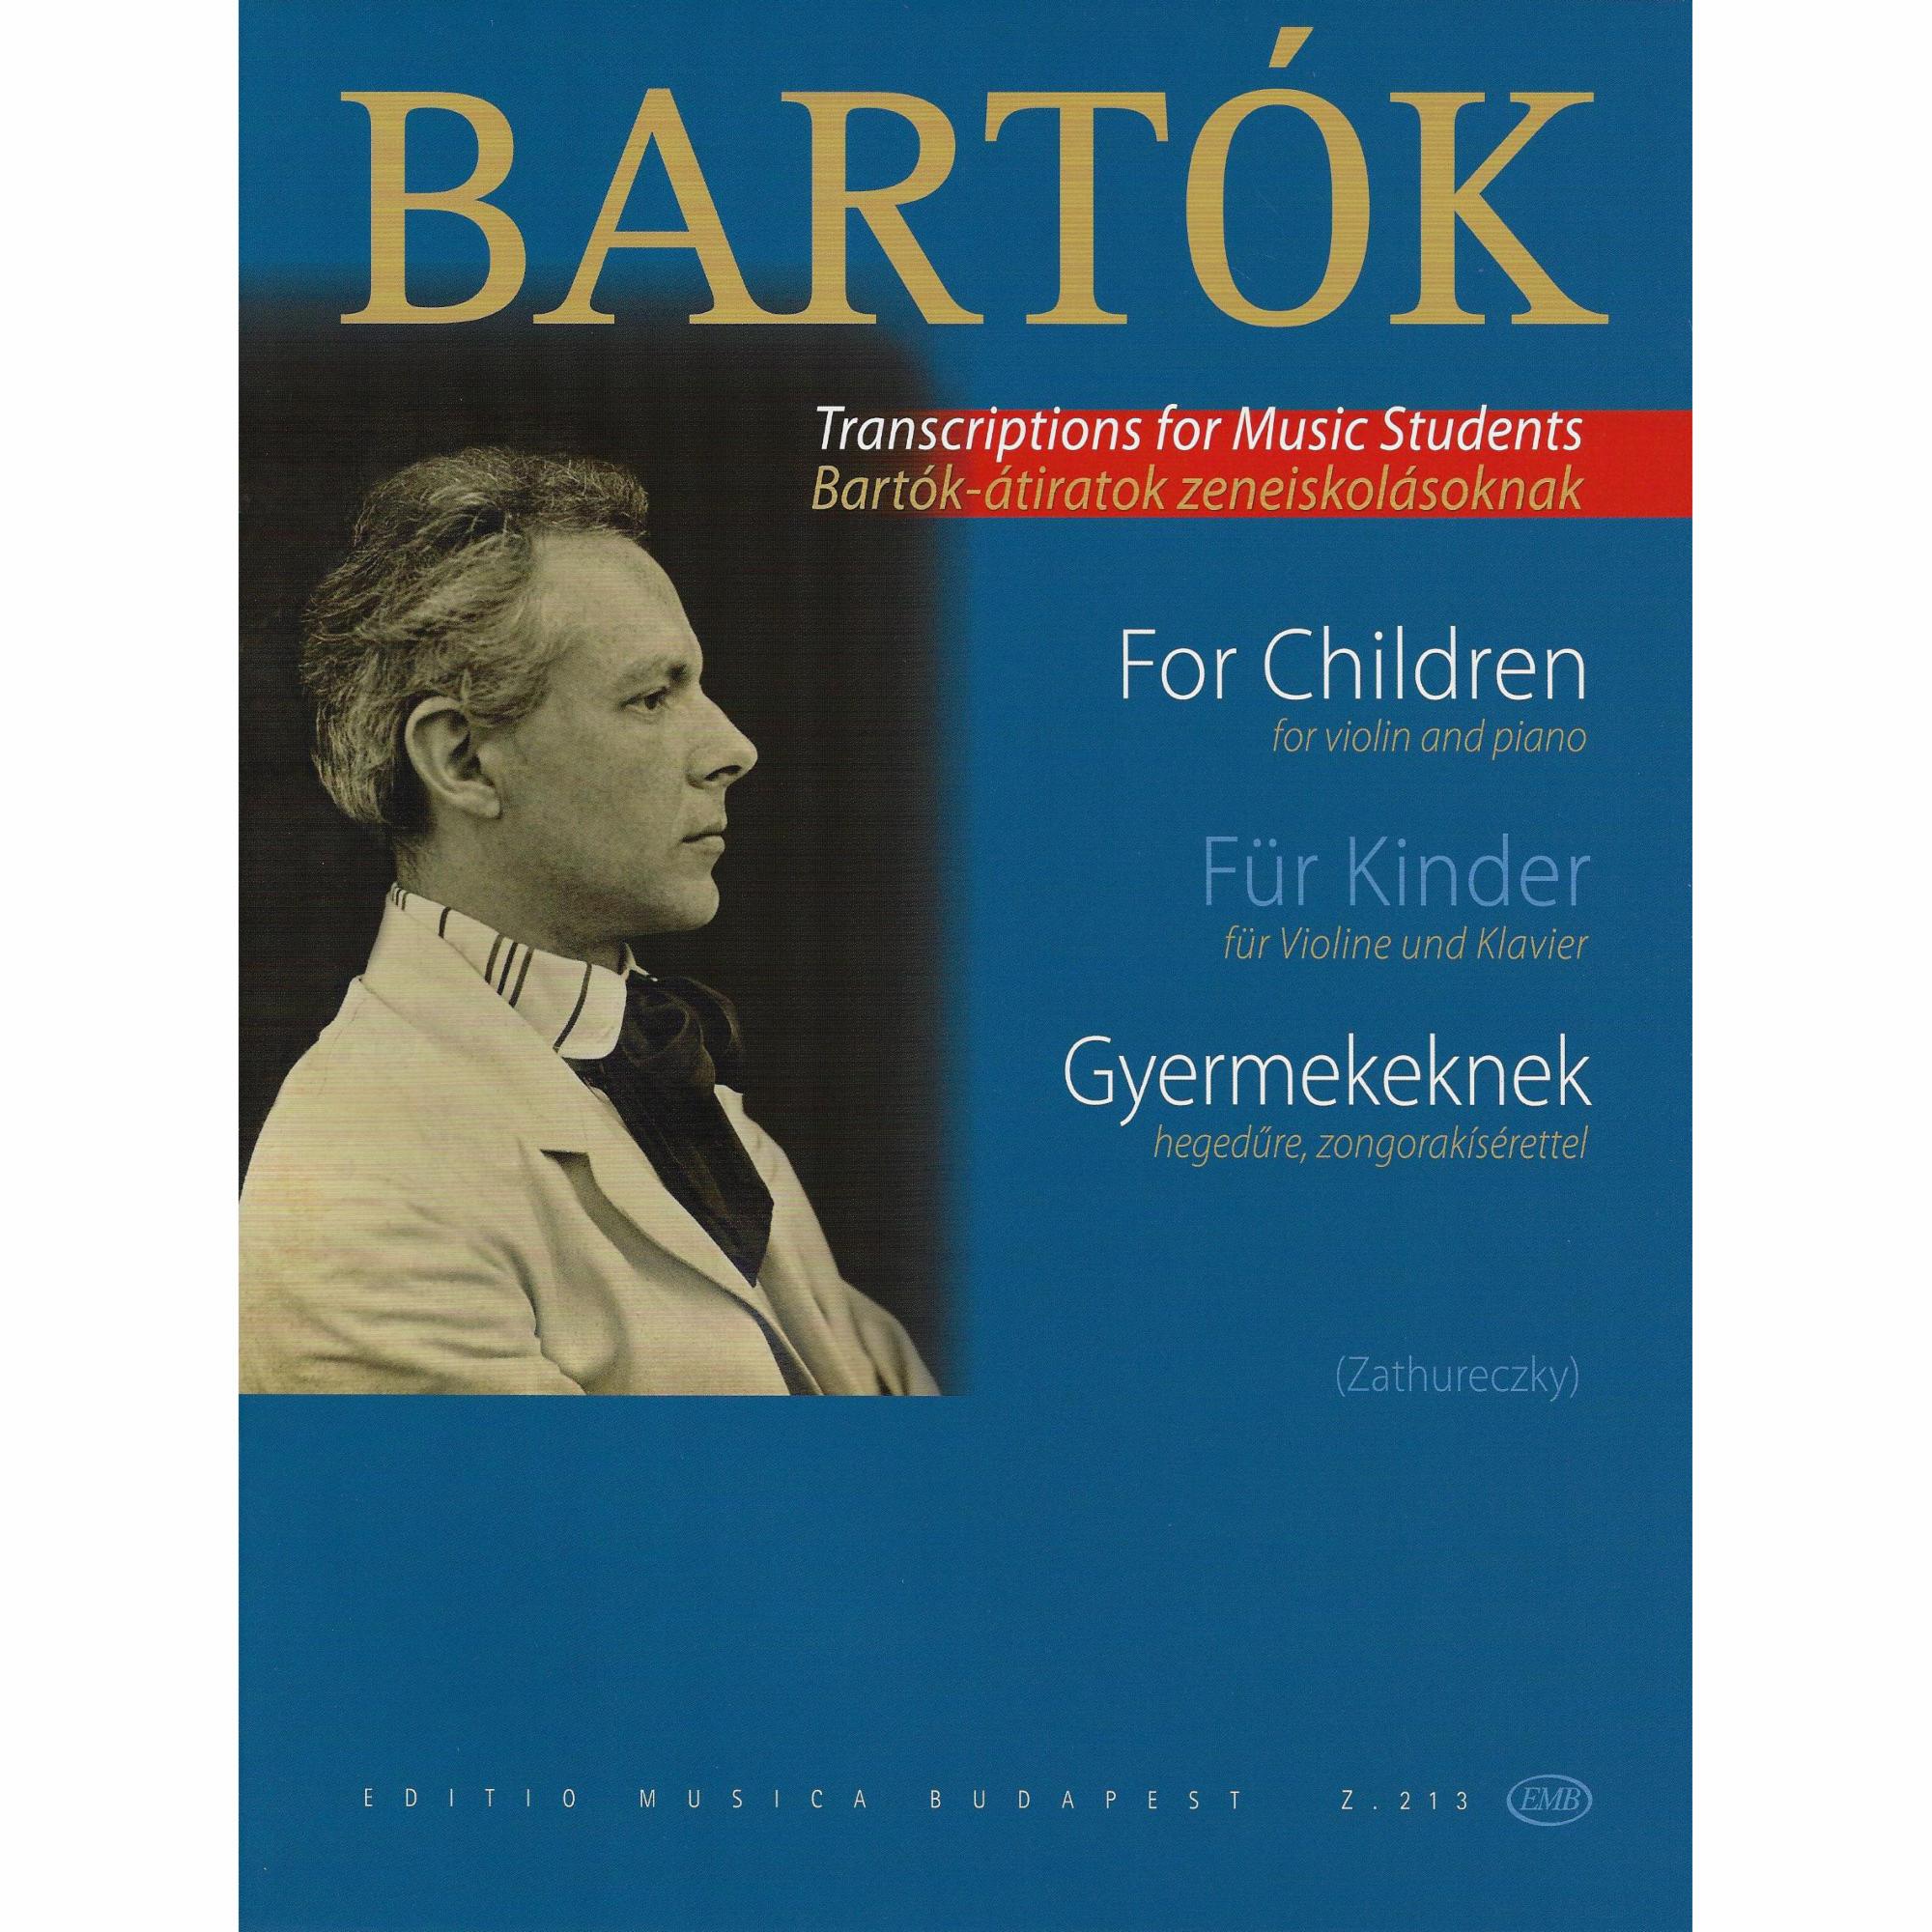 Bartok -- For Children for Violin and Piano